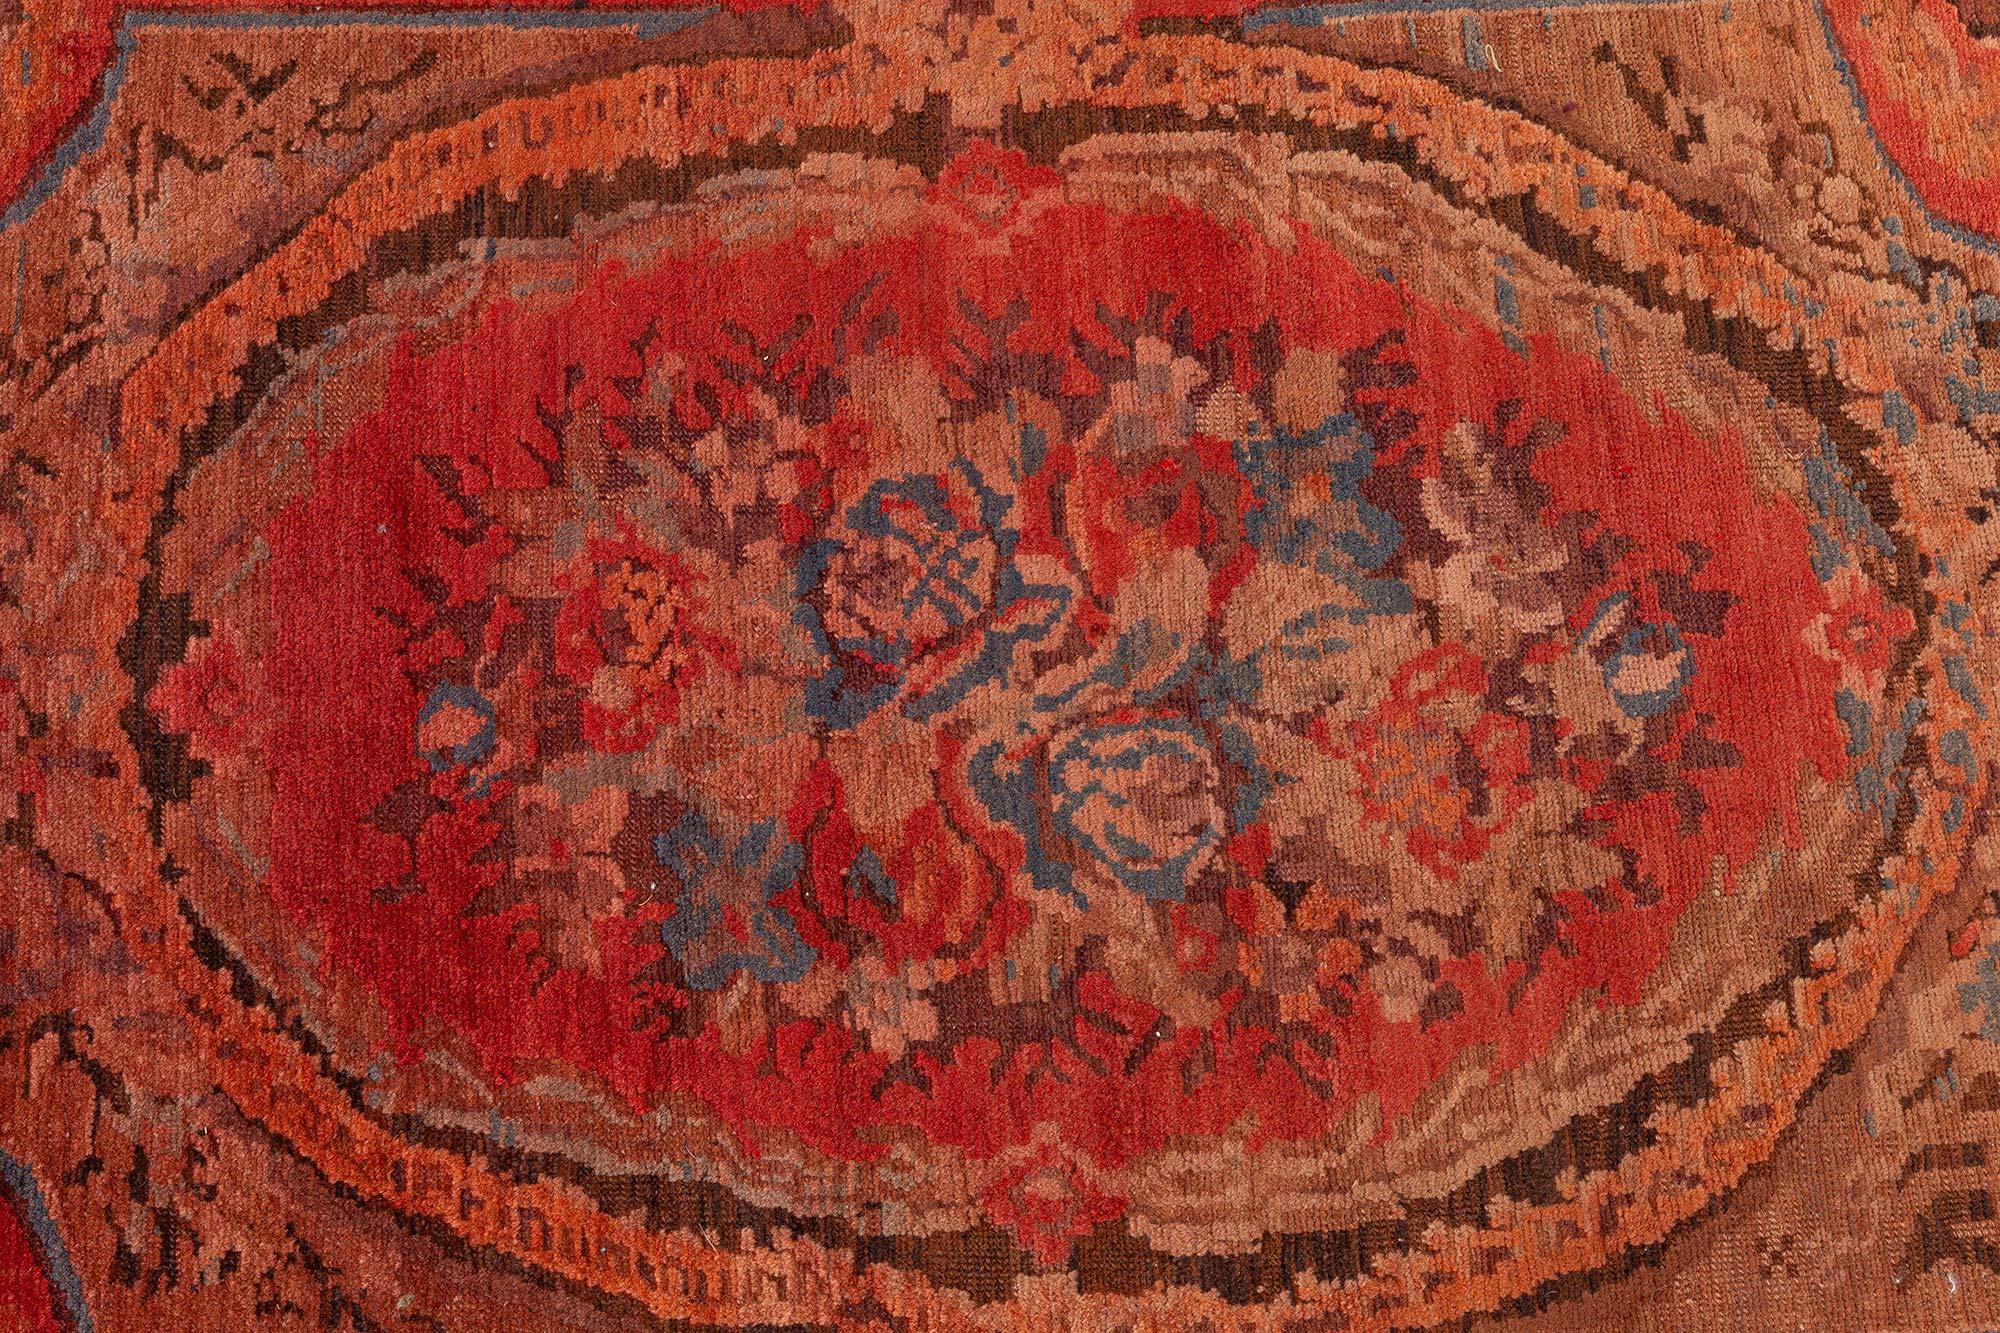 1900s Caucasian Karabagh handmade wool carpet in red, orange and brow
Size: 7'9